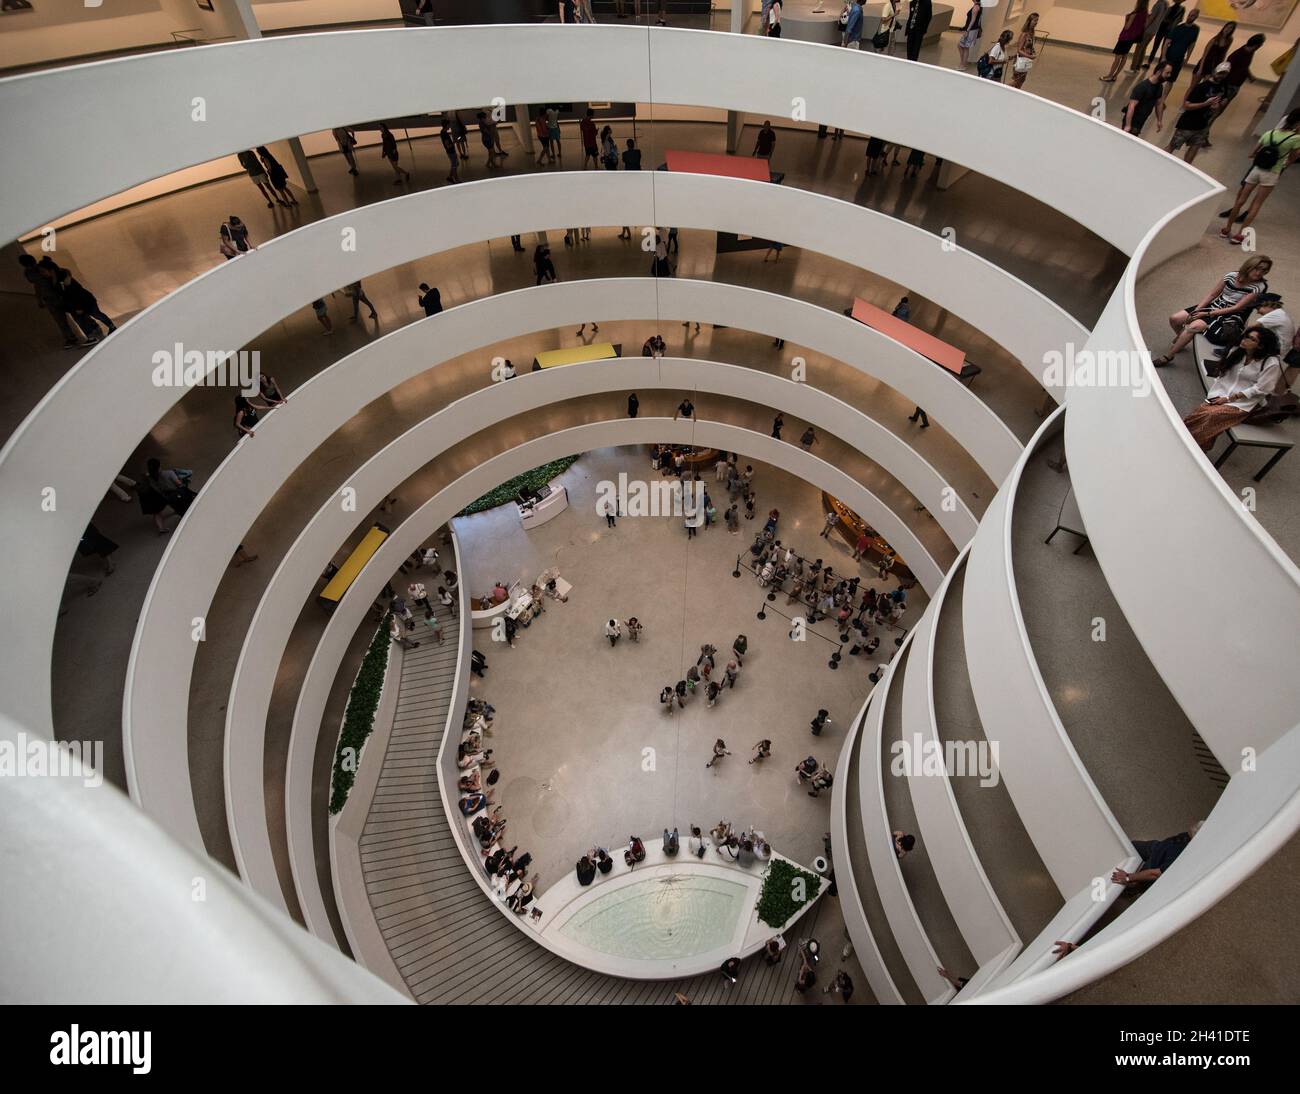 Atrium und Treppen im berühmten Guggenheim Museum in New York, USA Stockfoto